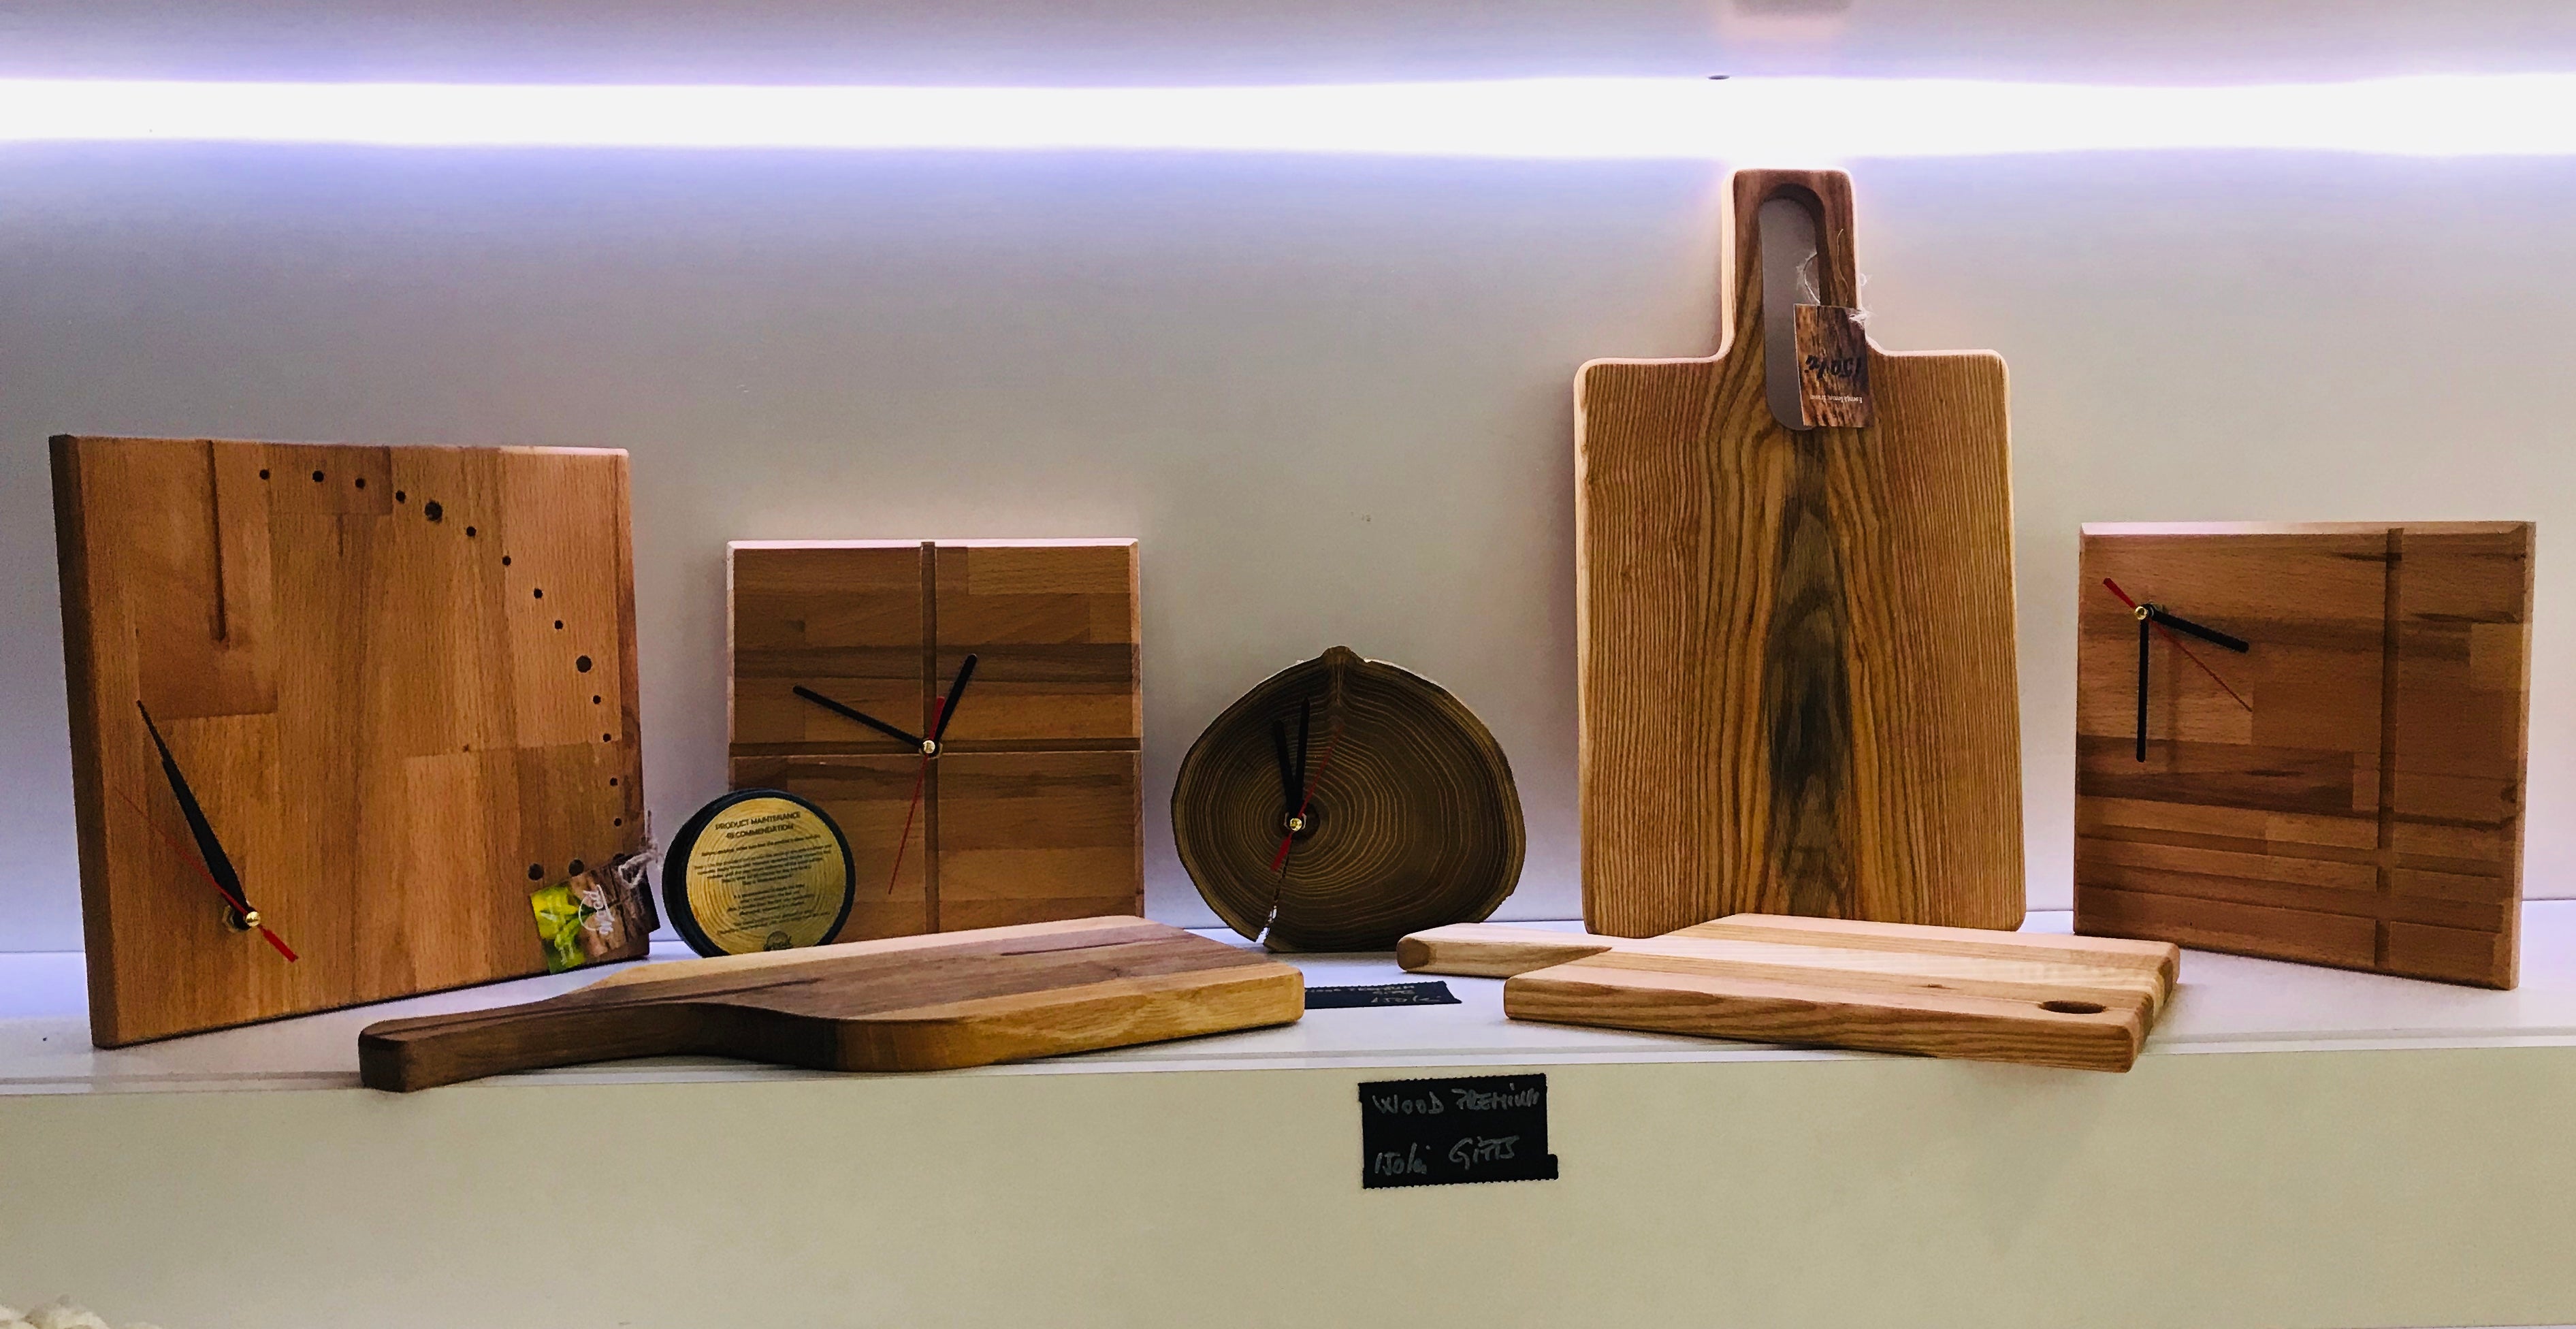 Wood Premium Gifts ceas de perete Tree